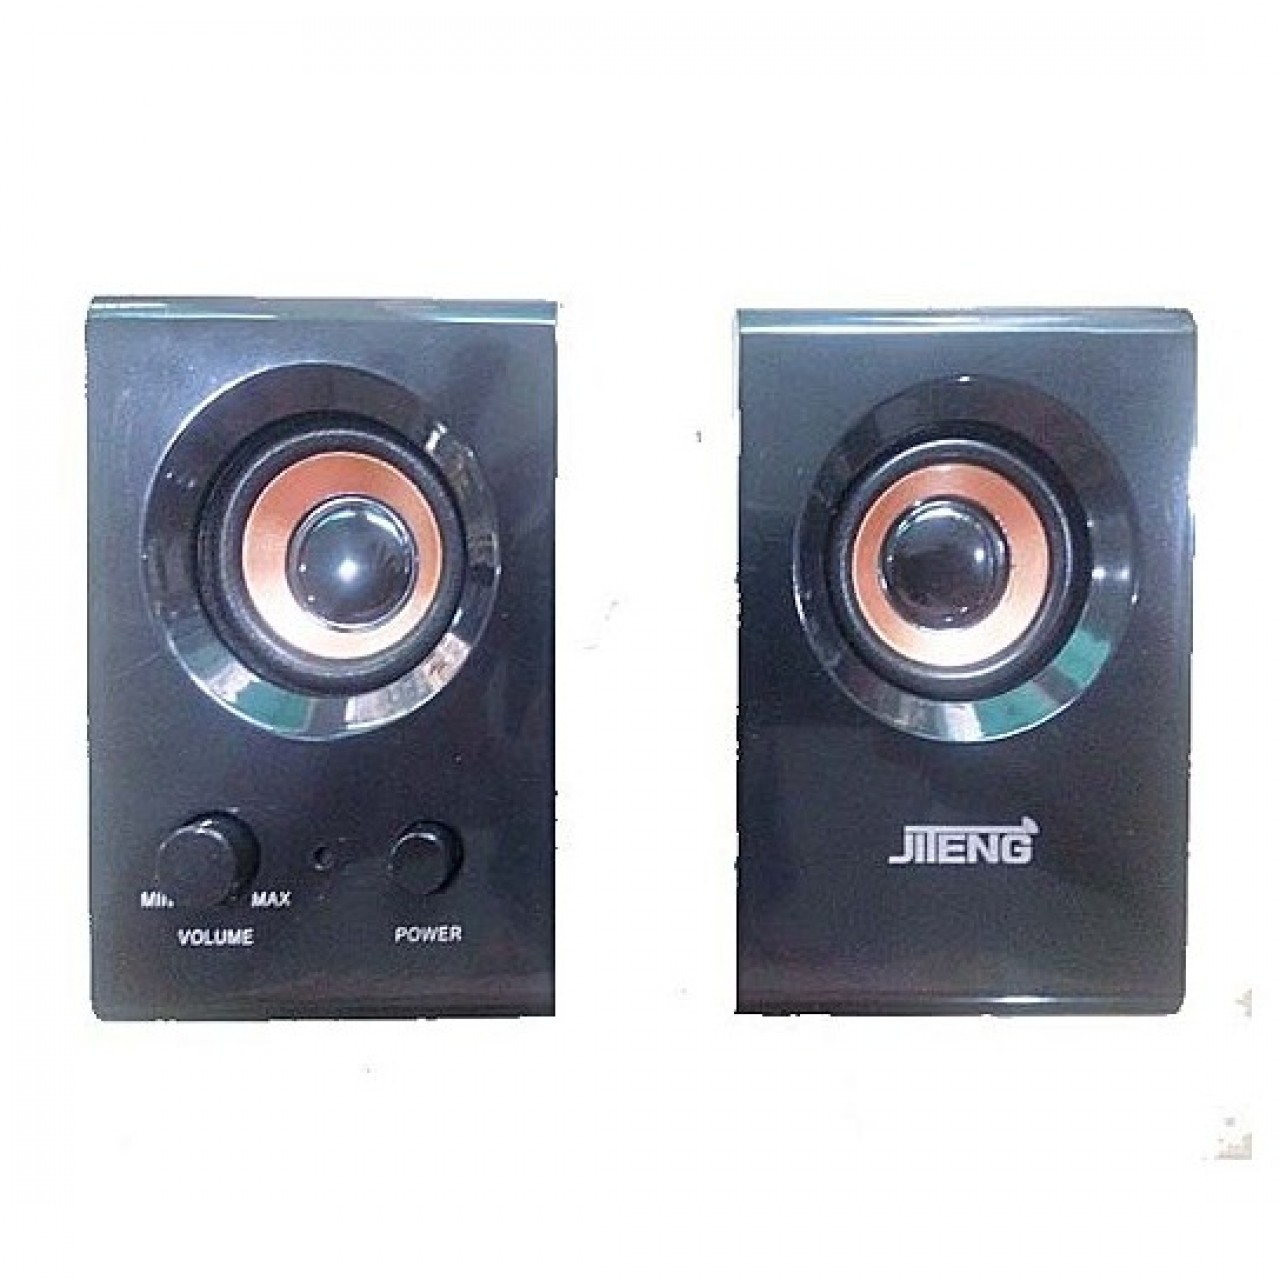 Jiteng D99A Portable Multimedia Speakers For Mobiles & Laptops